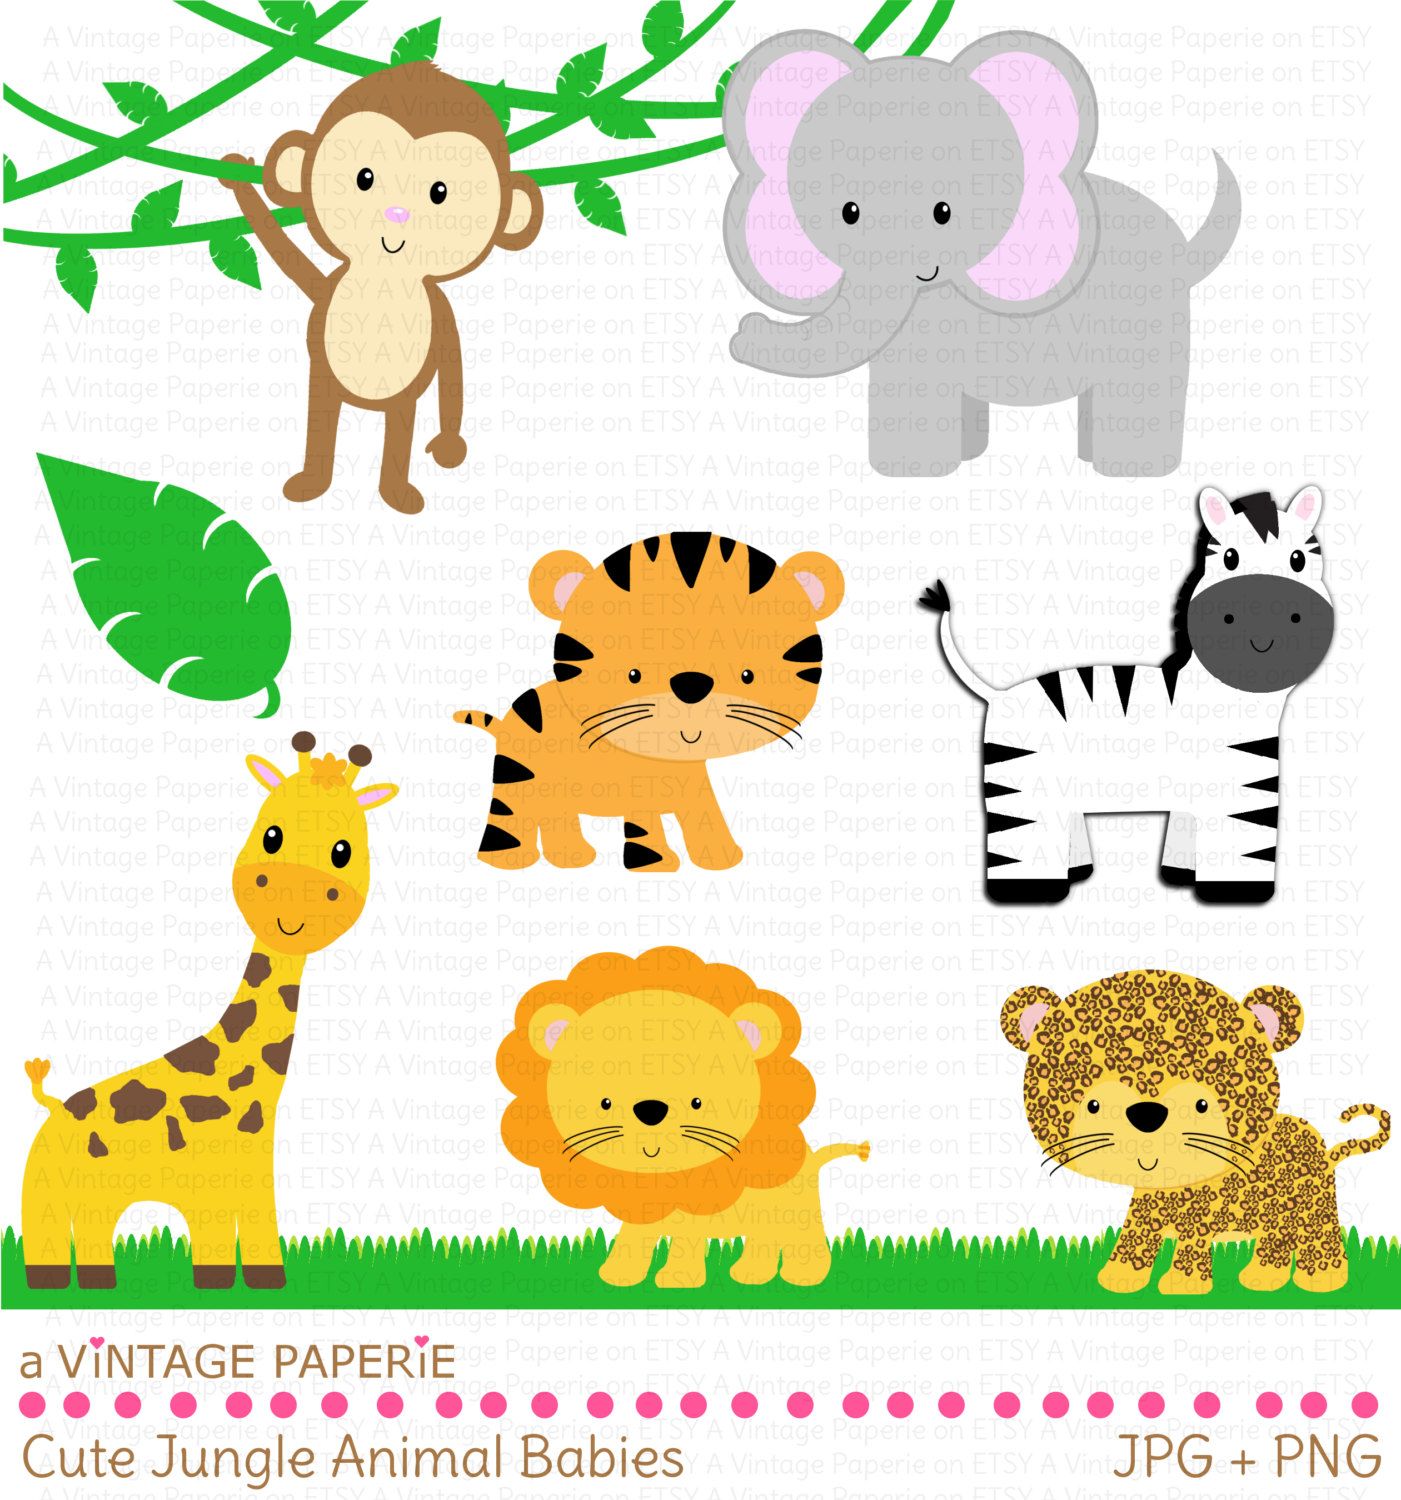 Baby Giraffe SVG cutting file